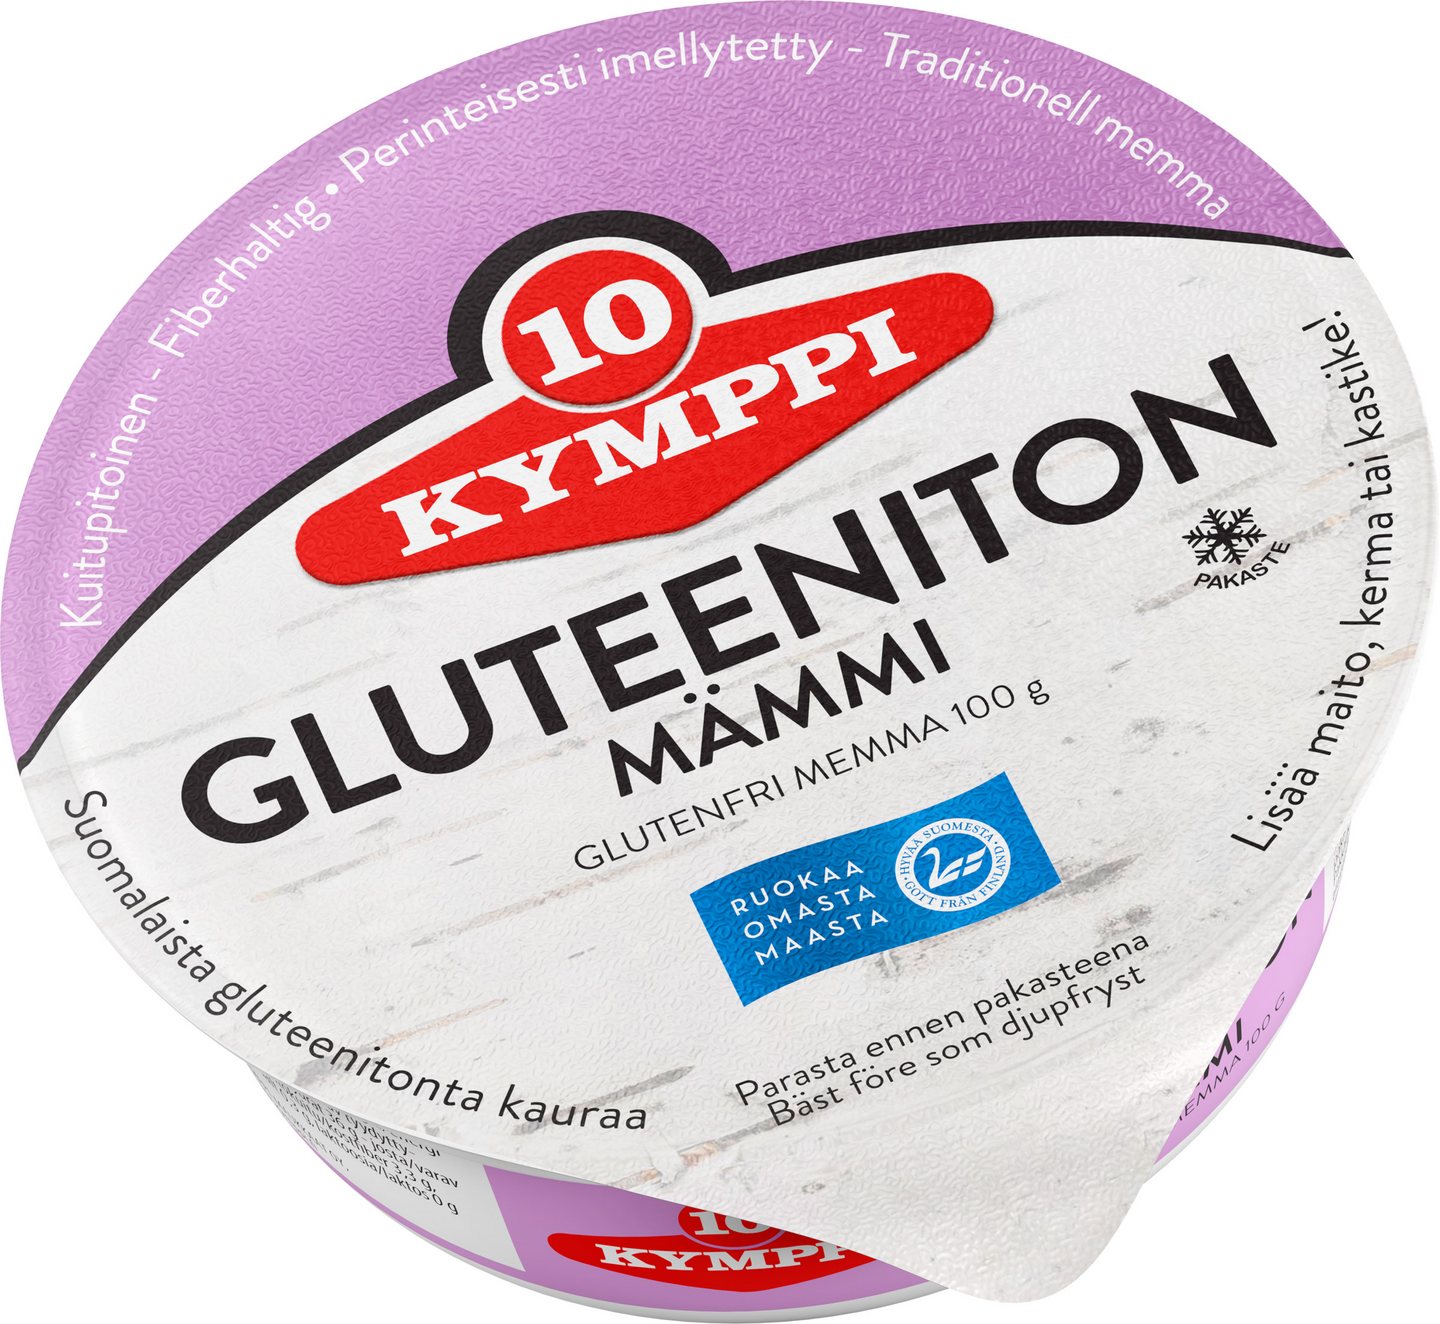 Kymppi gluteeniton mämmi 100 g pakaste